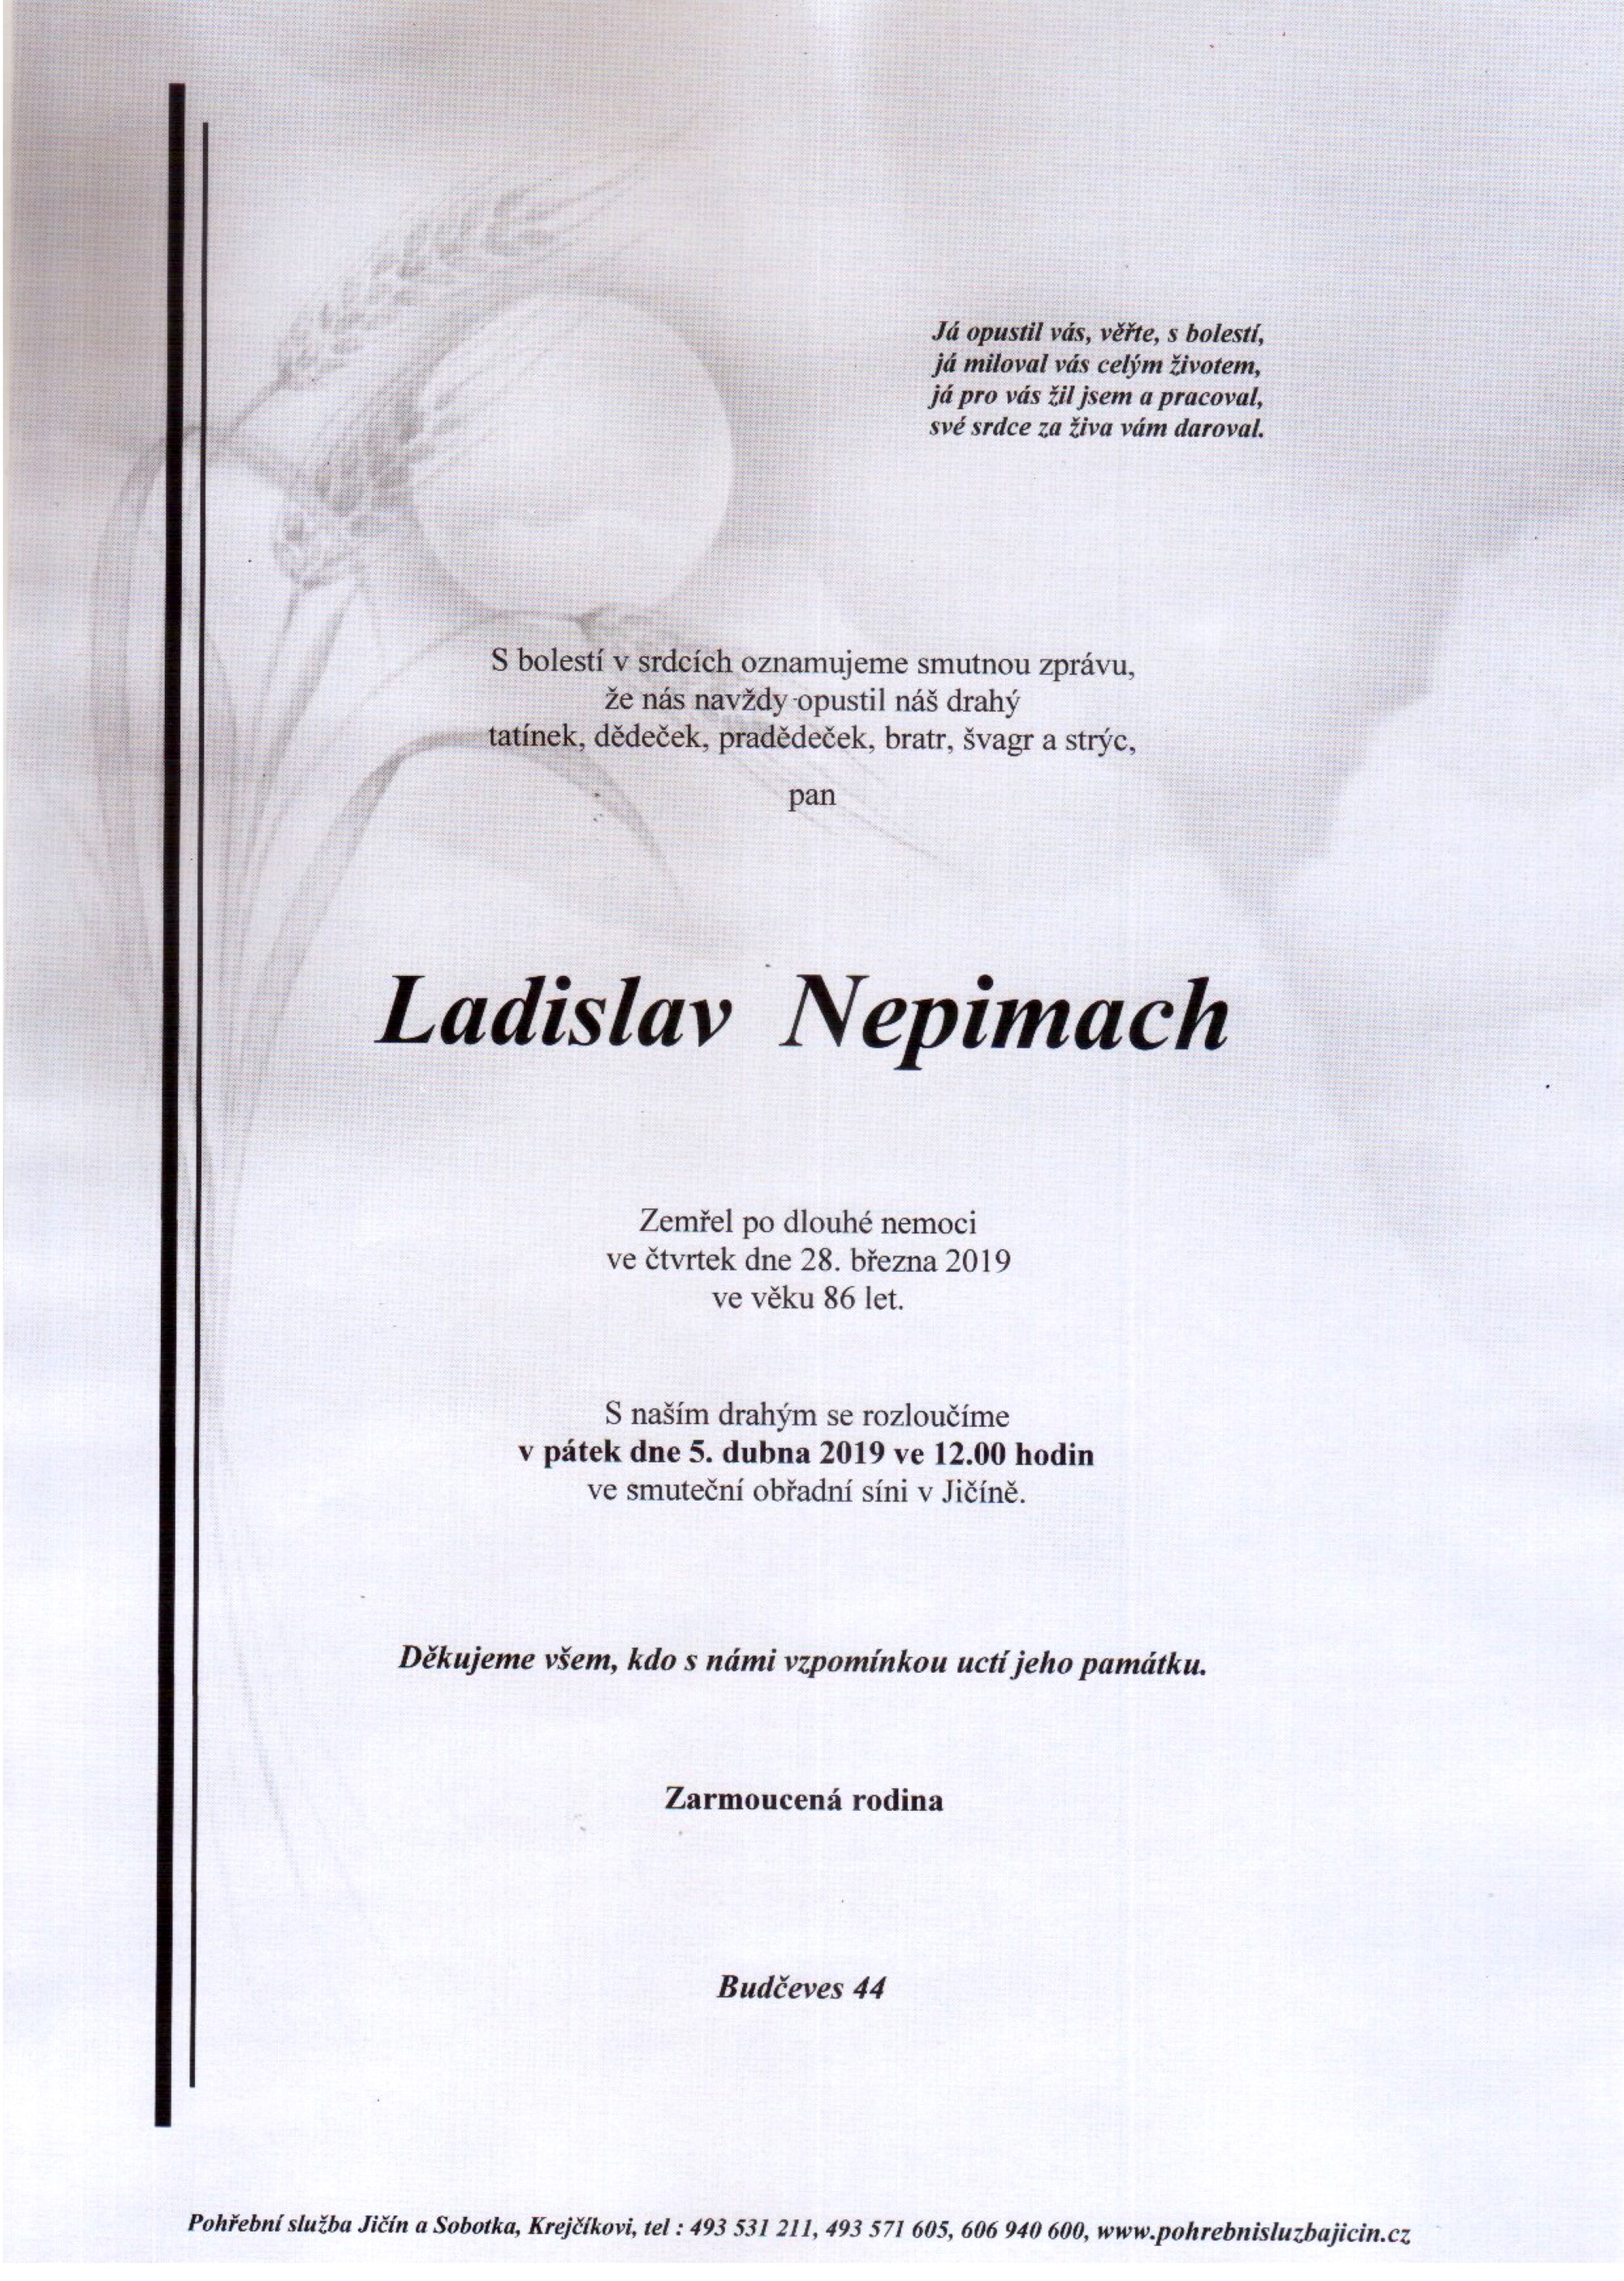 Ladislav Nepimach